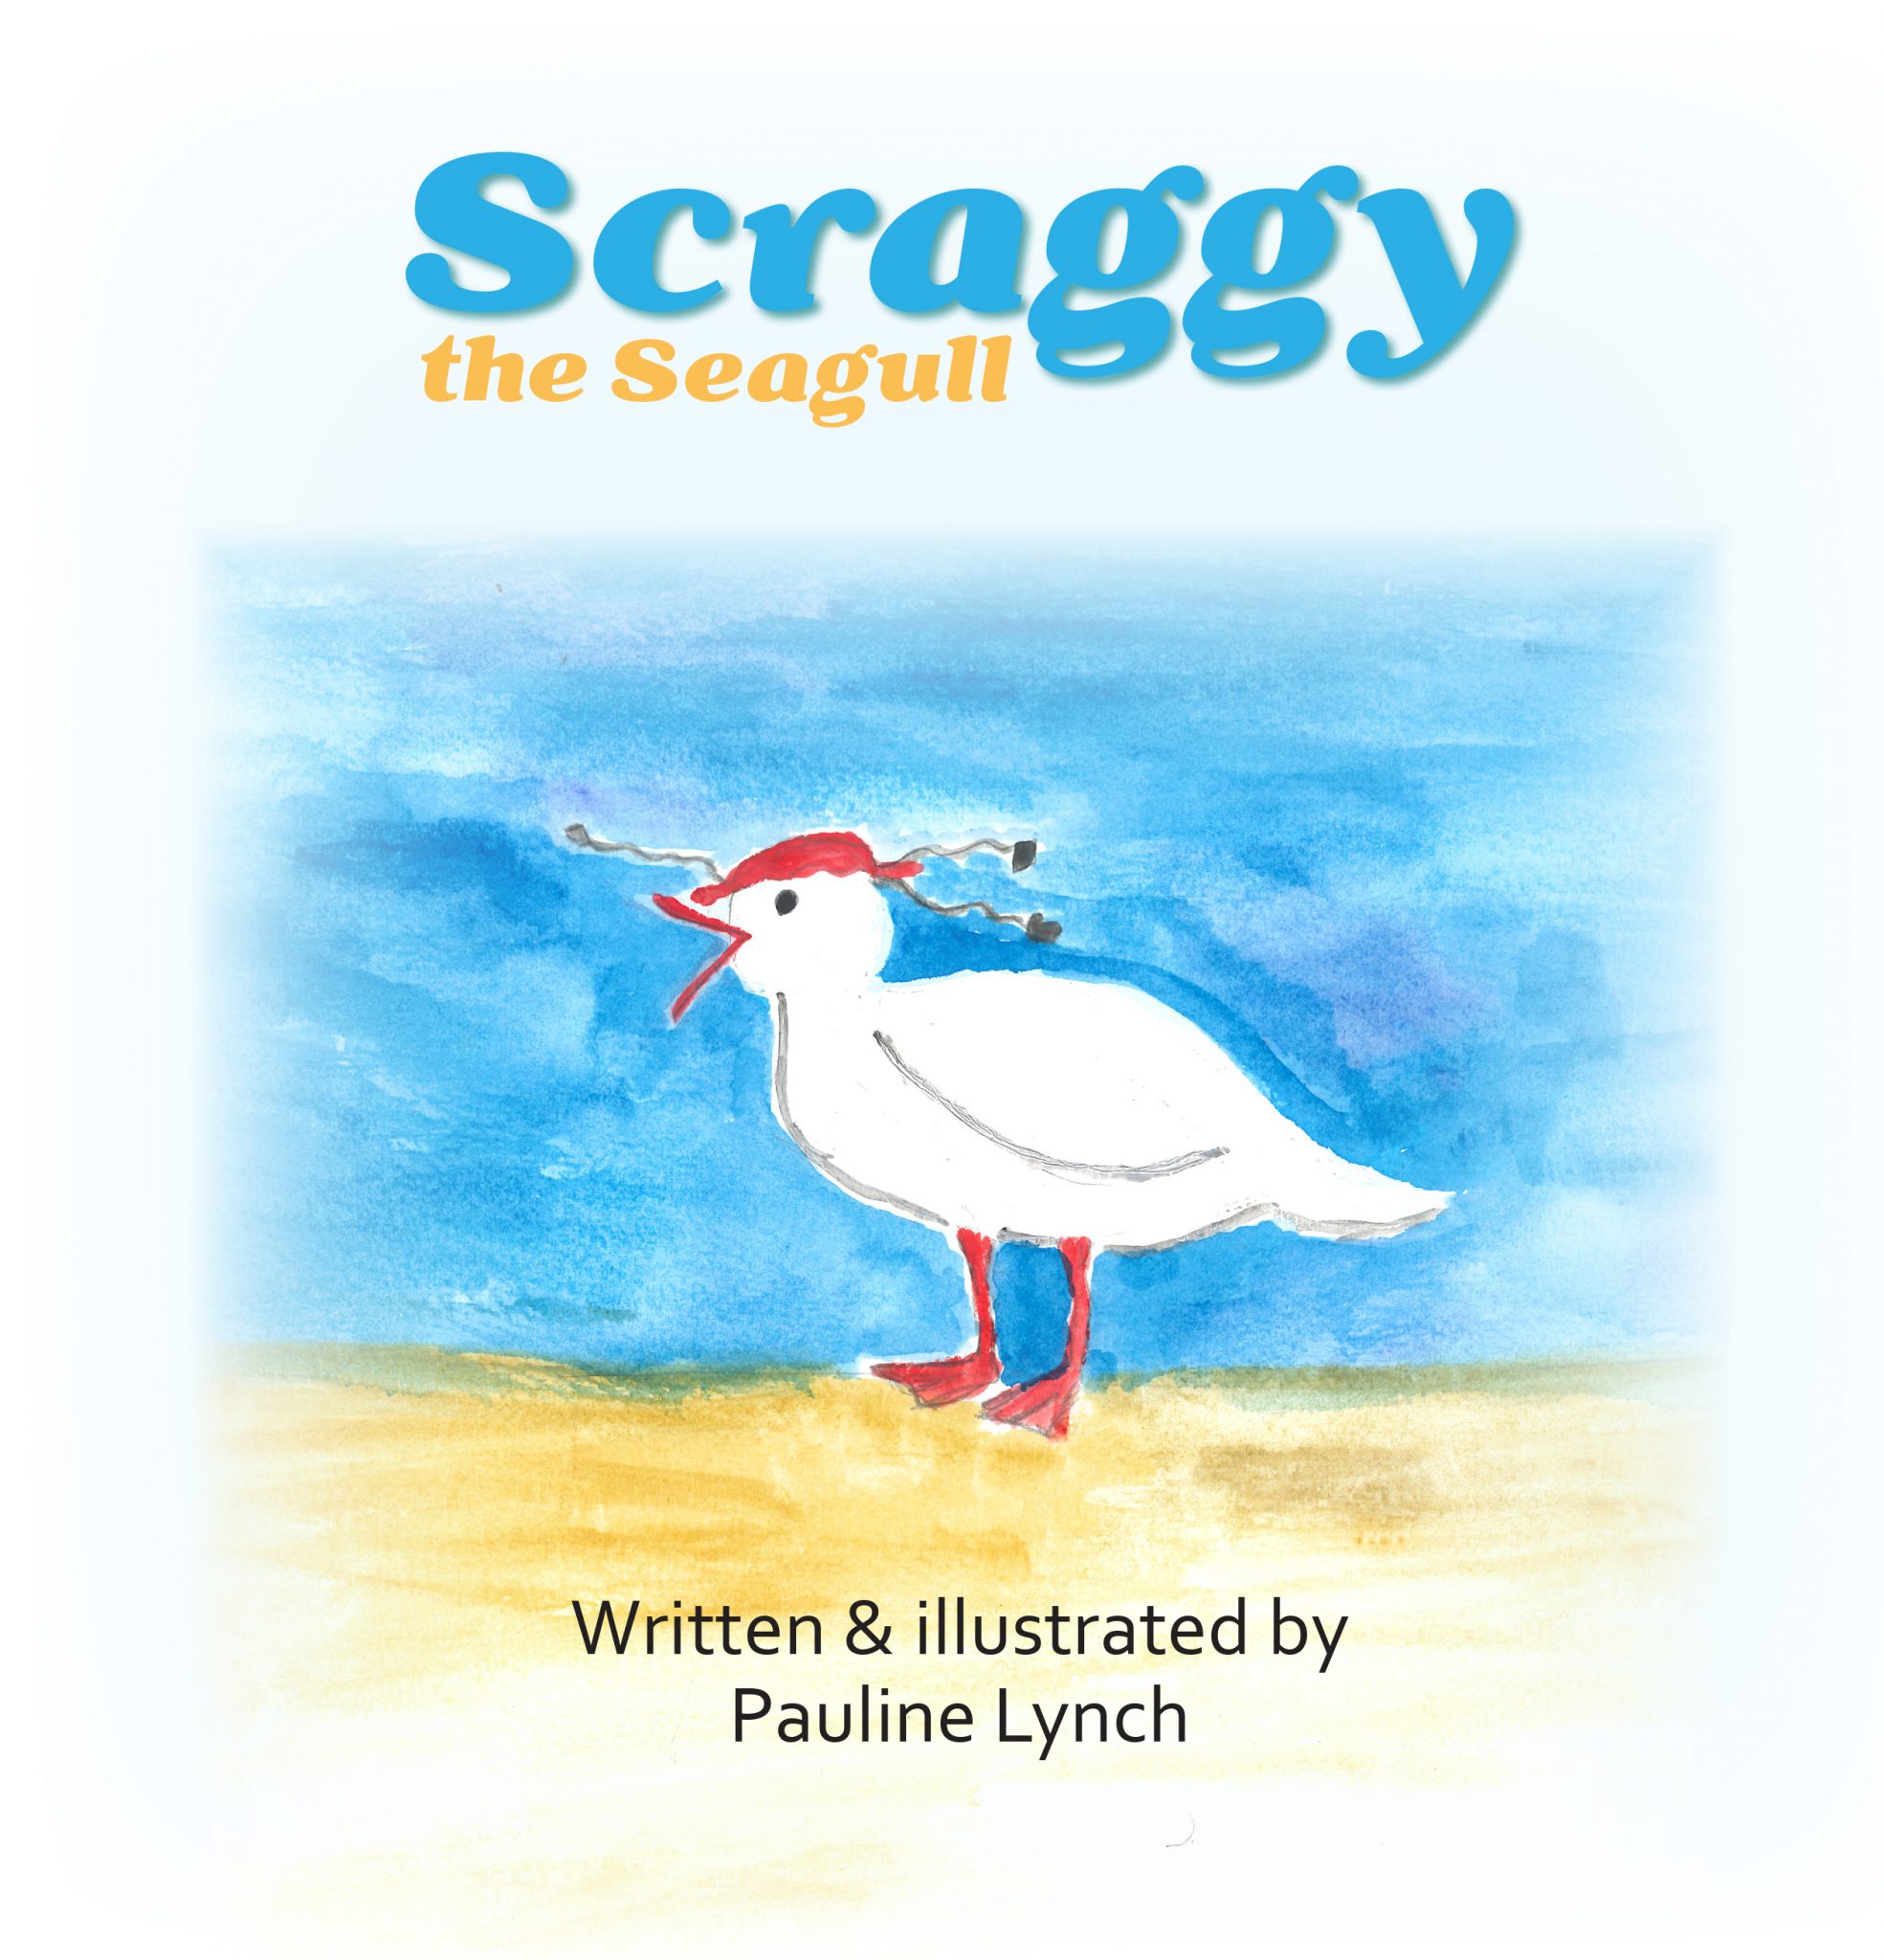 Scraggy the Seagul